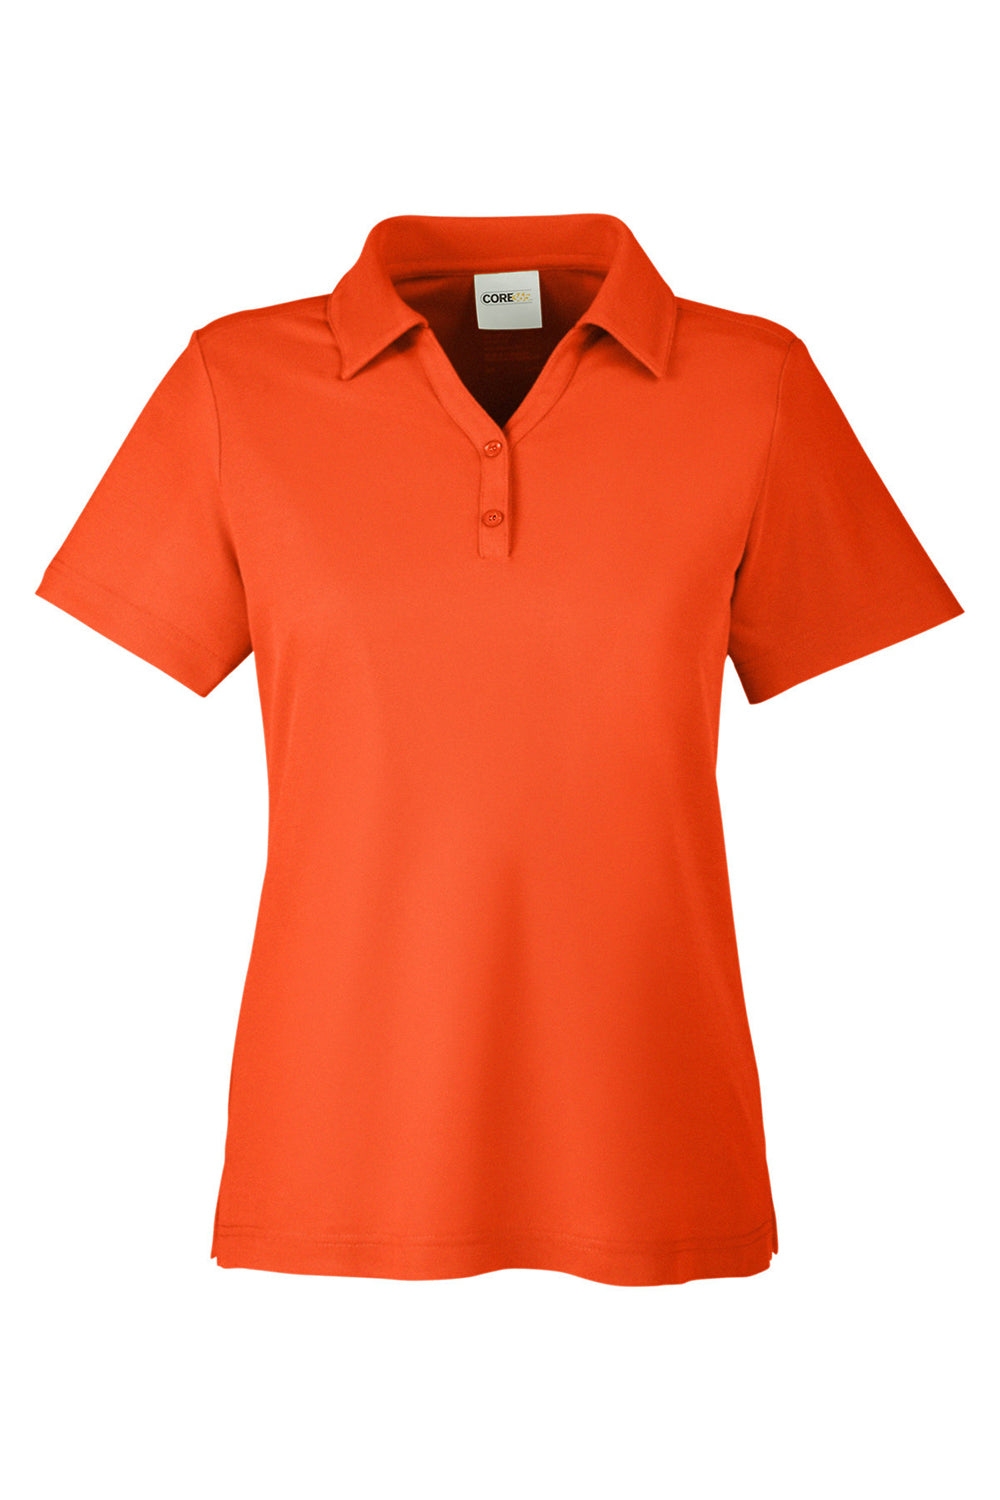 Core 365 CE112W Womens Fusion ChromaSoft Performance Moisture Wicking Pique Short Sleeve Polo Shirt Campus Orange Flat Front